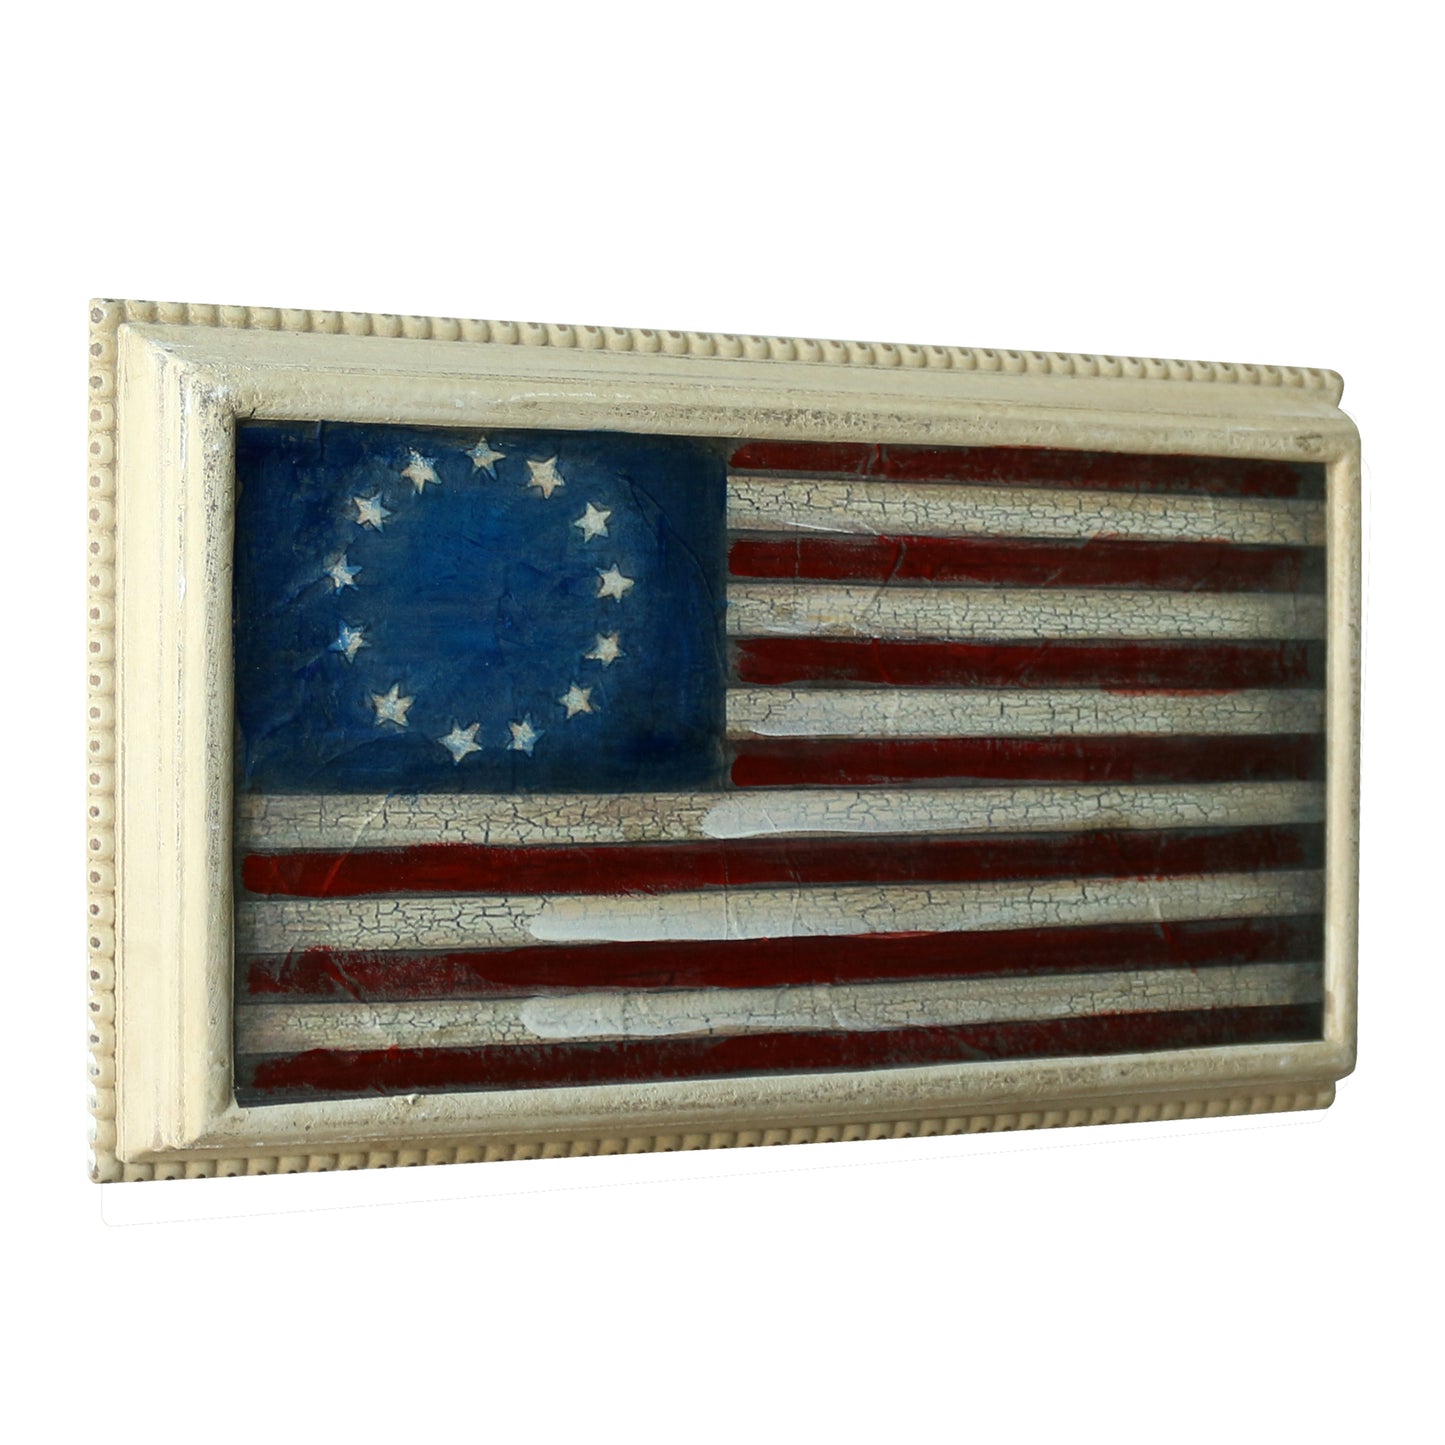 CVHOMEDECO. Primitive Retro Hand Painted Wooden Frame Wall Hanging 3D Painting Decoration Art, Vintage Flag Design, 14.75 x 8.5 Inch